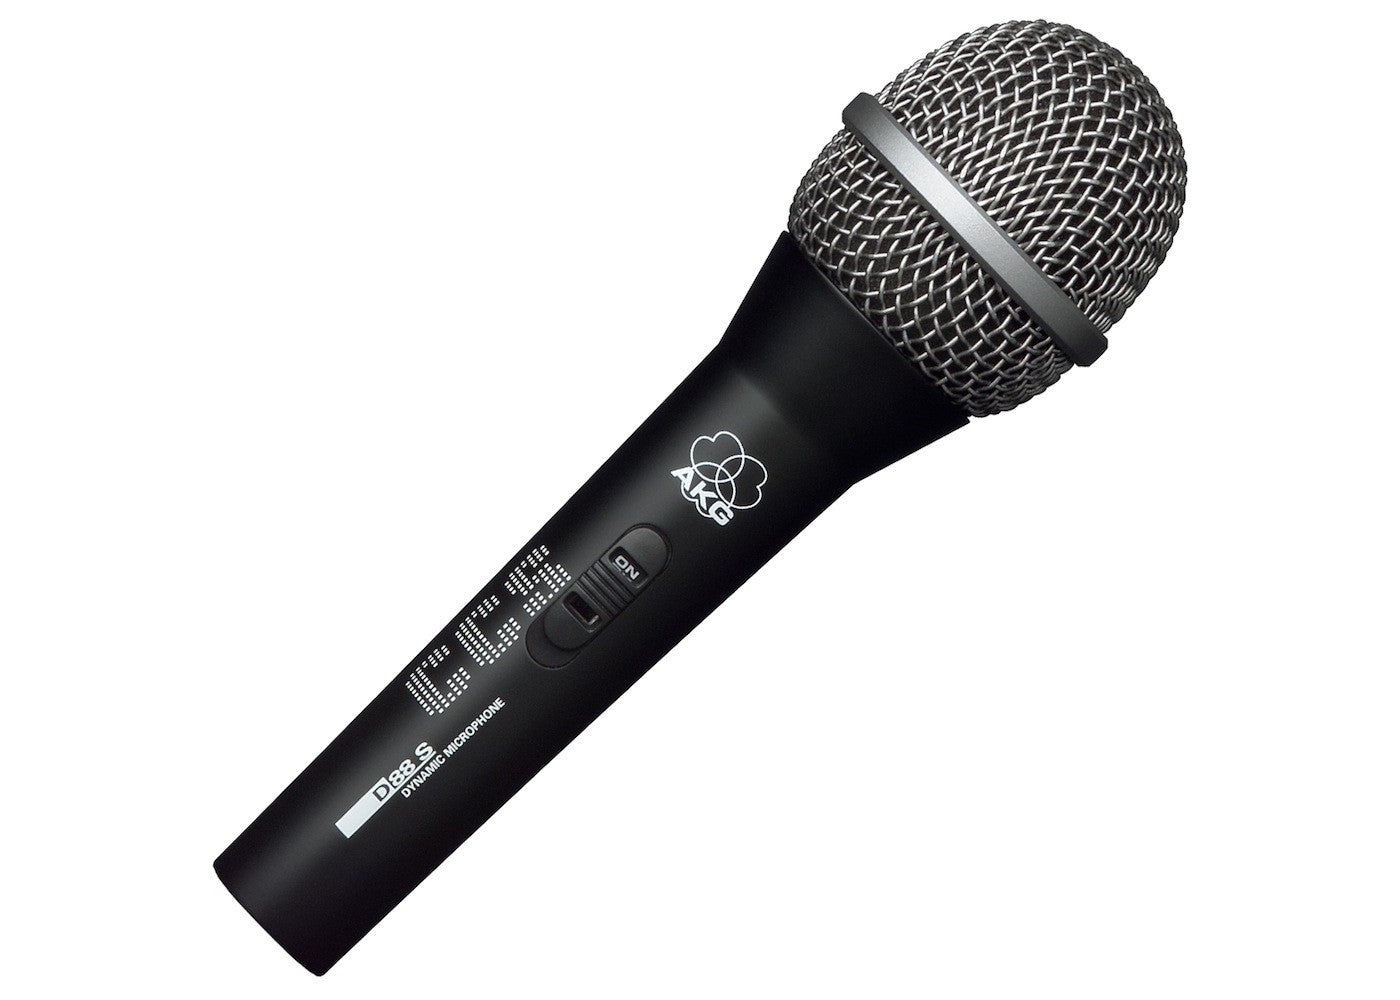 AKG D 88 S Dynamic Vocal Microphone